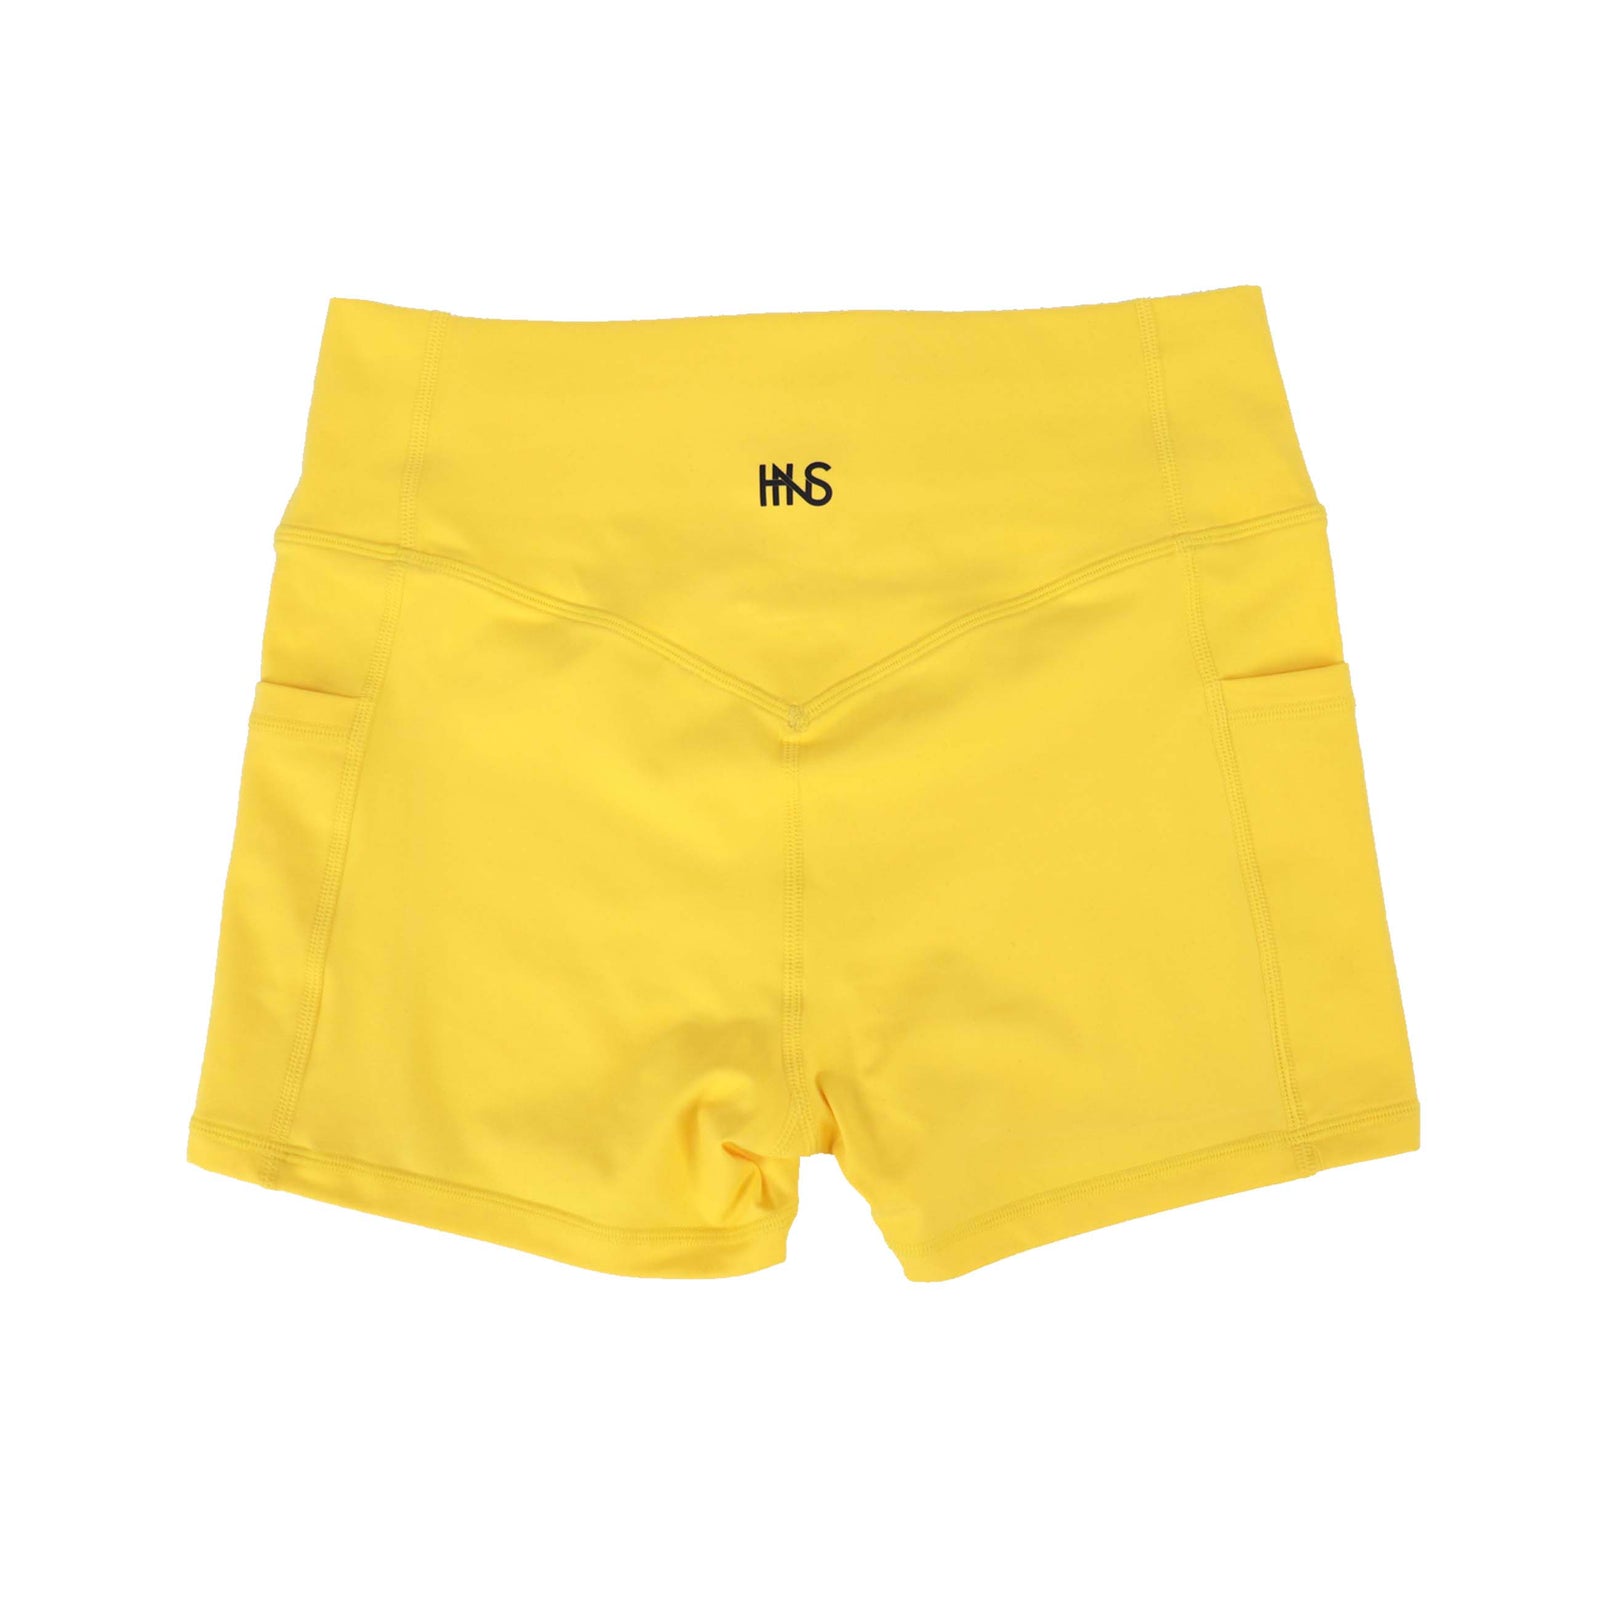  Girls' Athletic Shorts - Yellows / Girls' Athletic